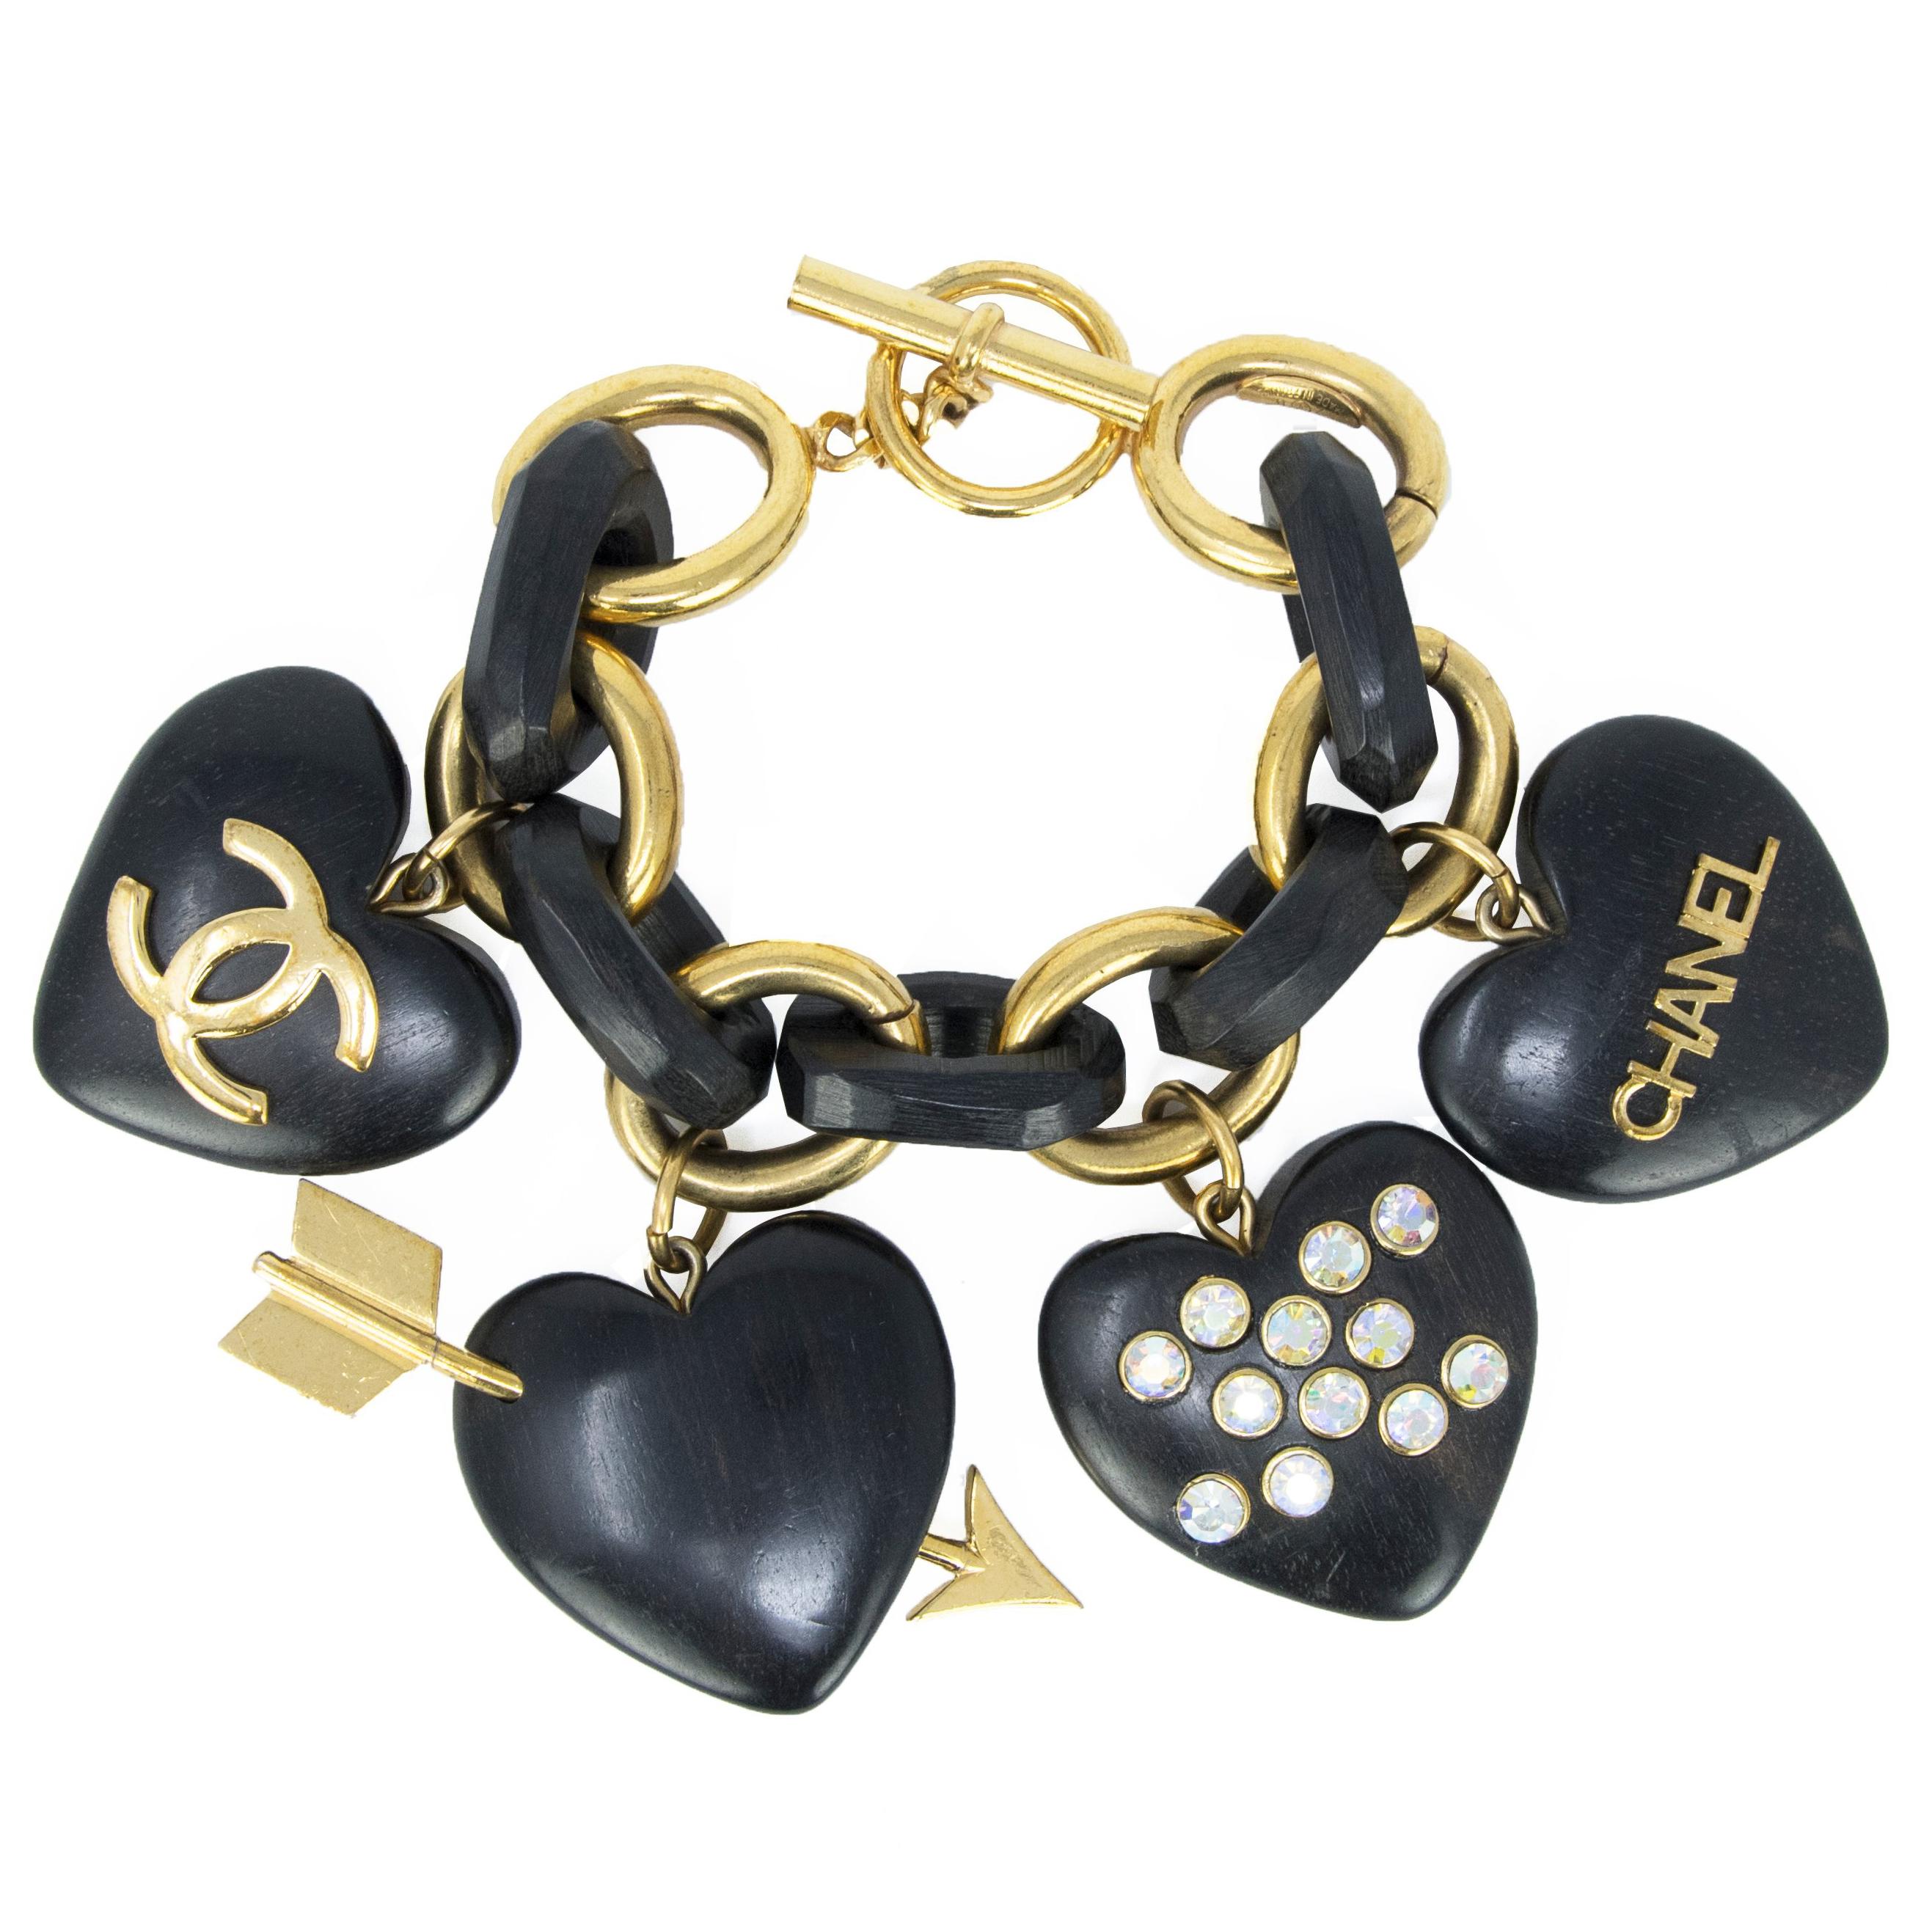 Chanel Gold and Black Wooden Charm Bracelet